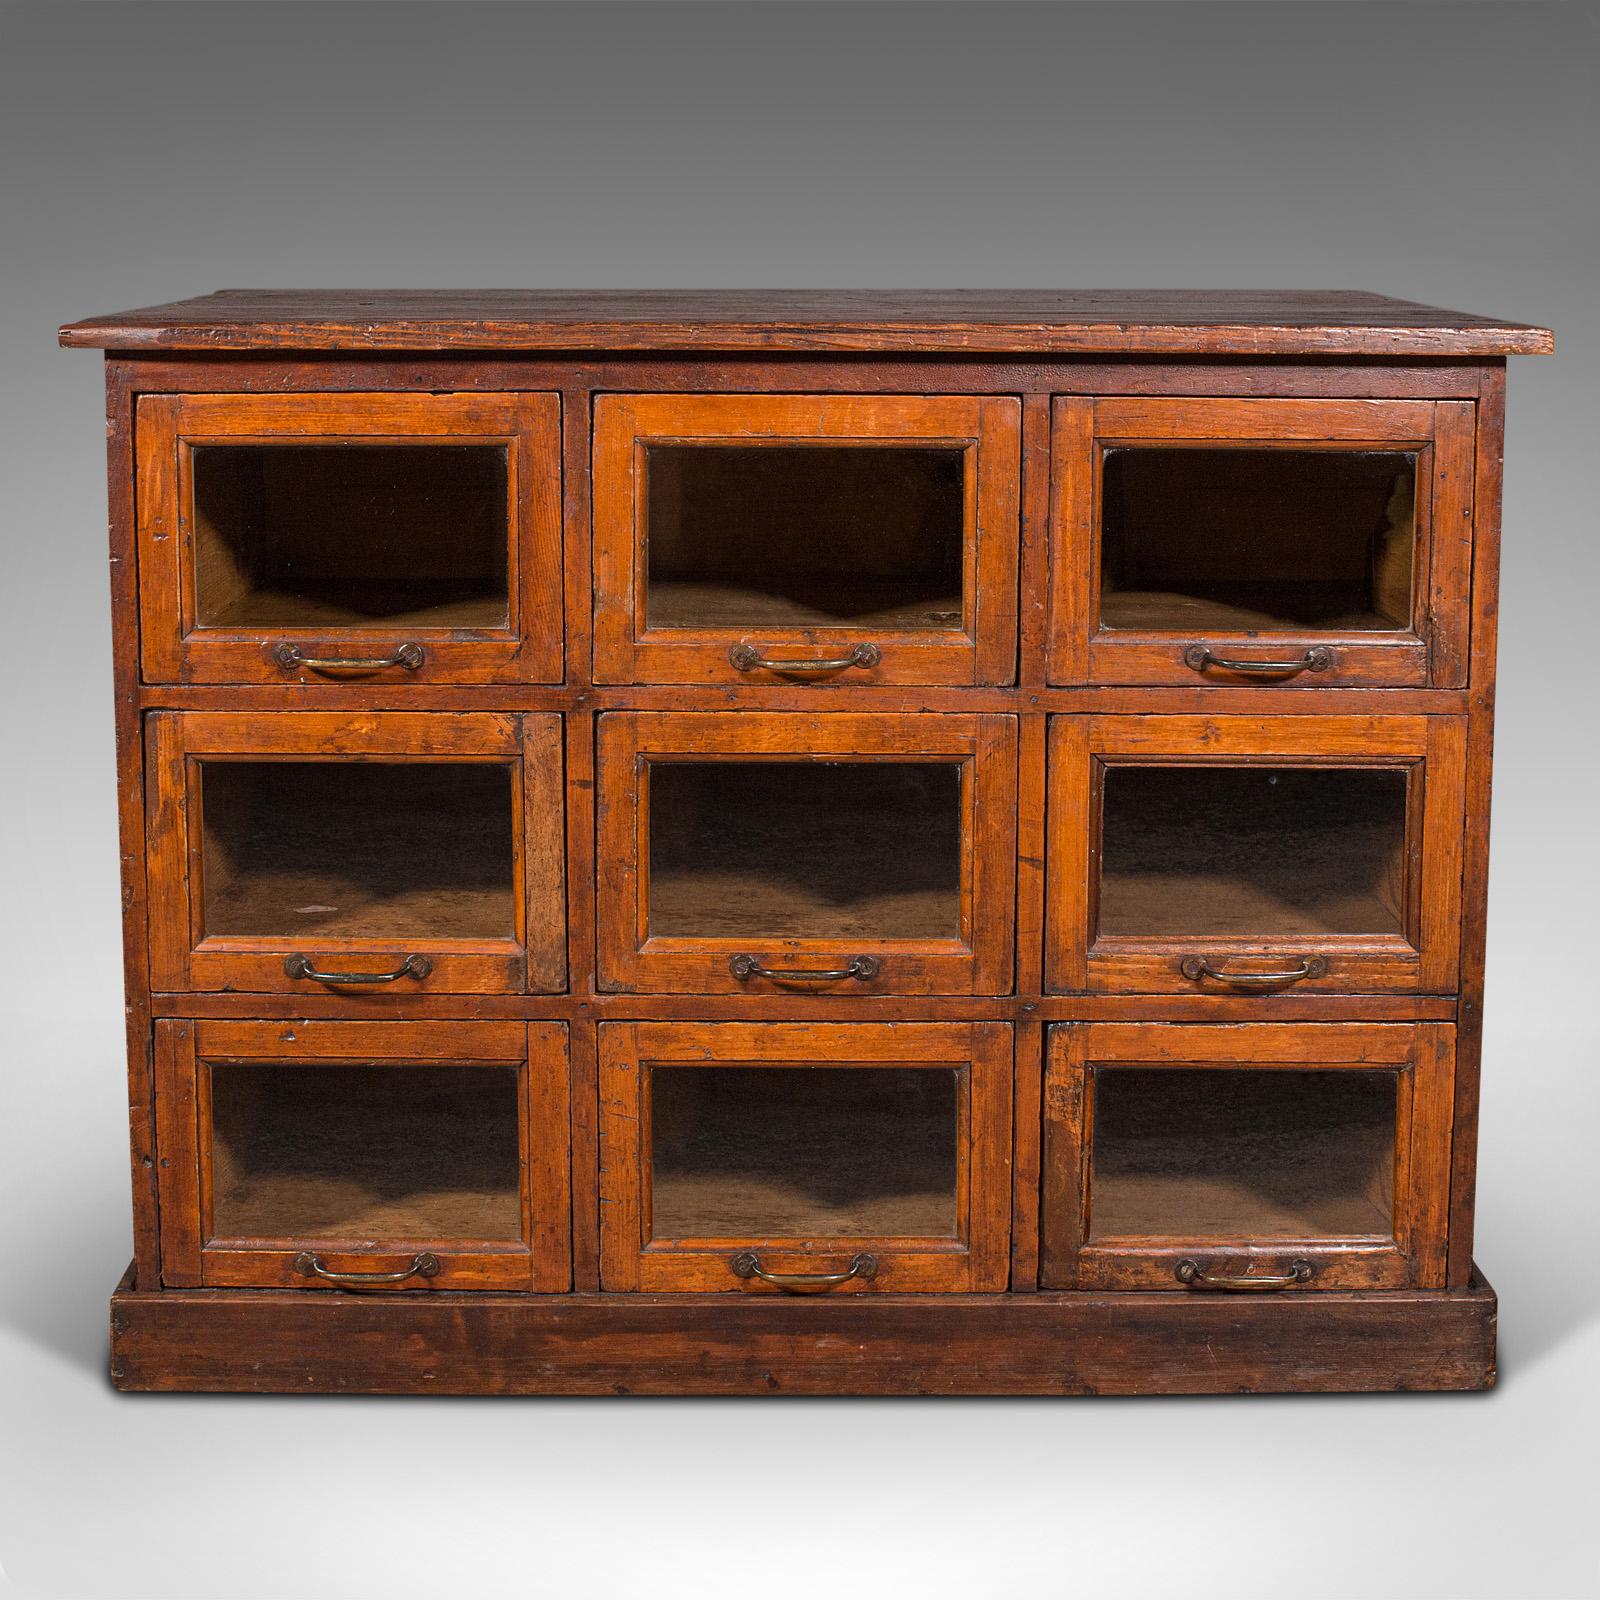 British Antique Haberdasher's Cabinet, English, Shop Keeper, Chest of Drawers, Victorian